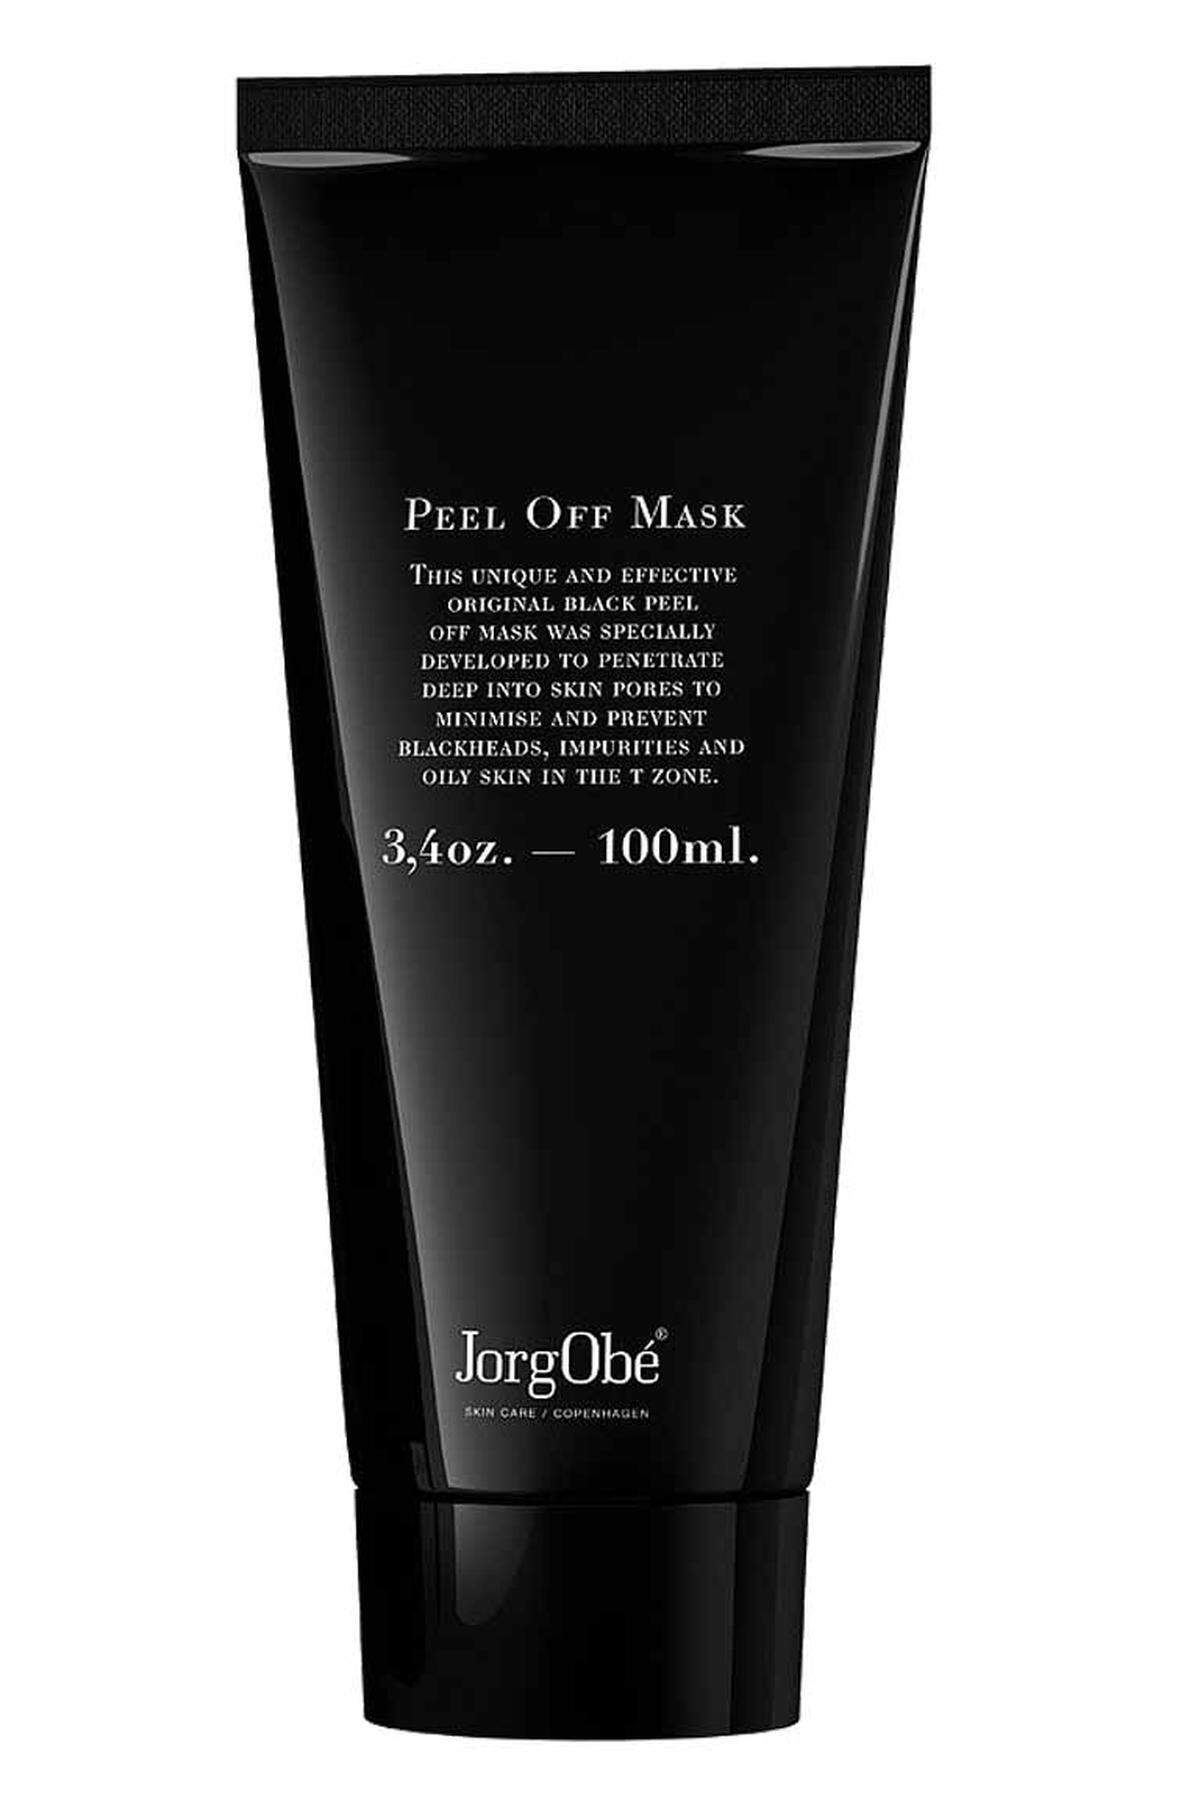 Gesichtsmaske "Black Peel Off Mask" von JorgOb , 26,90 Euro, www.niche-beauty.com.